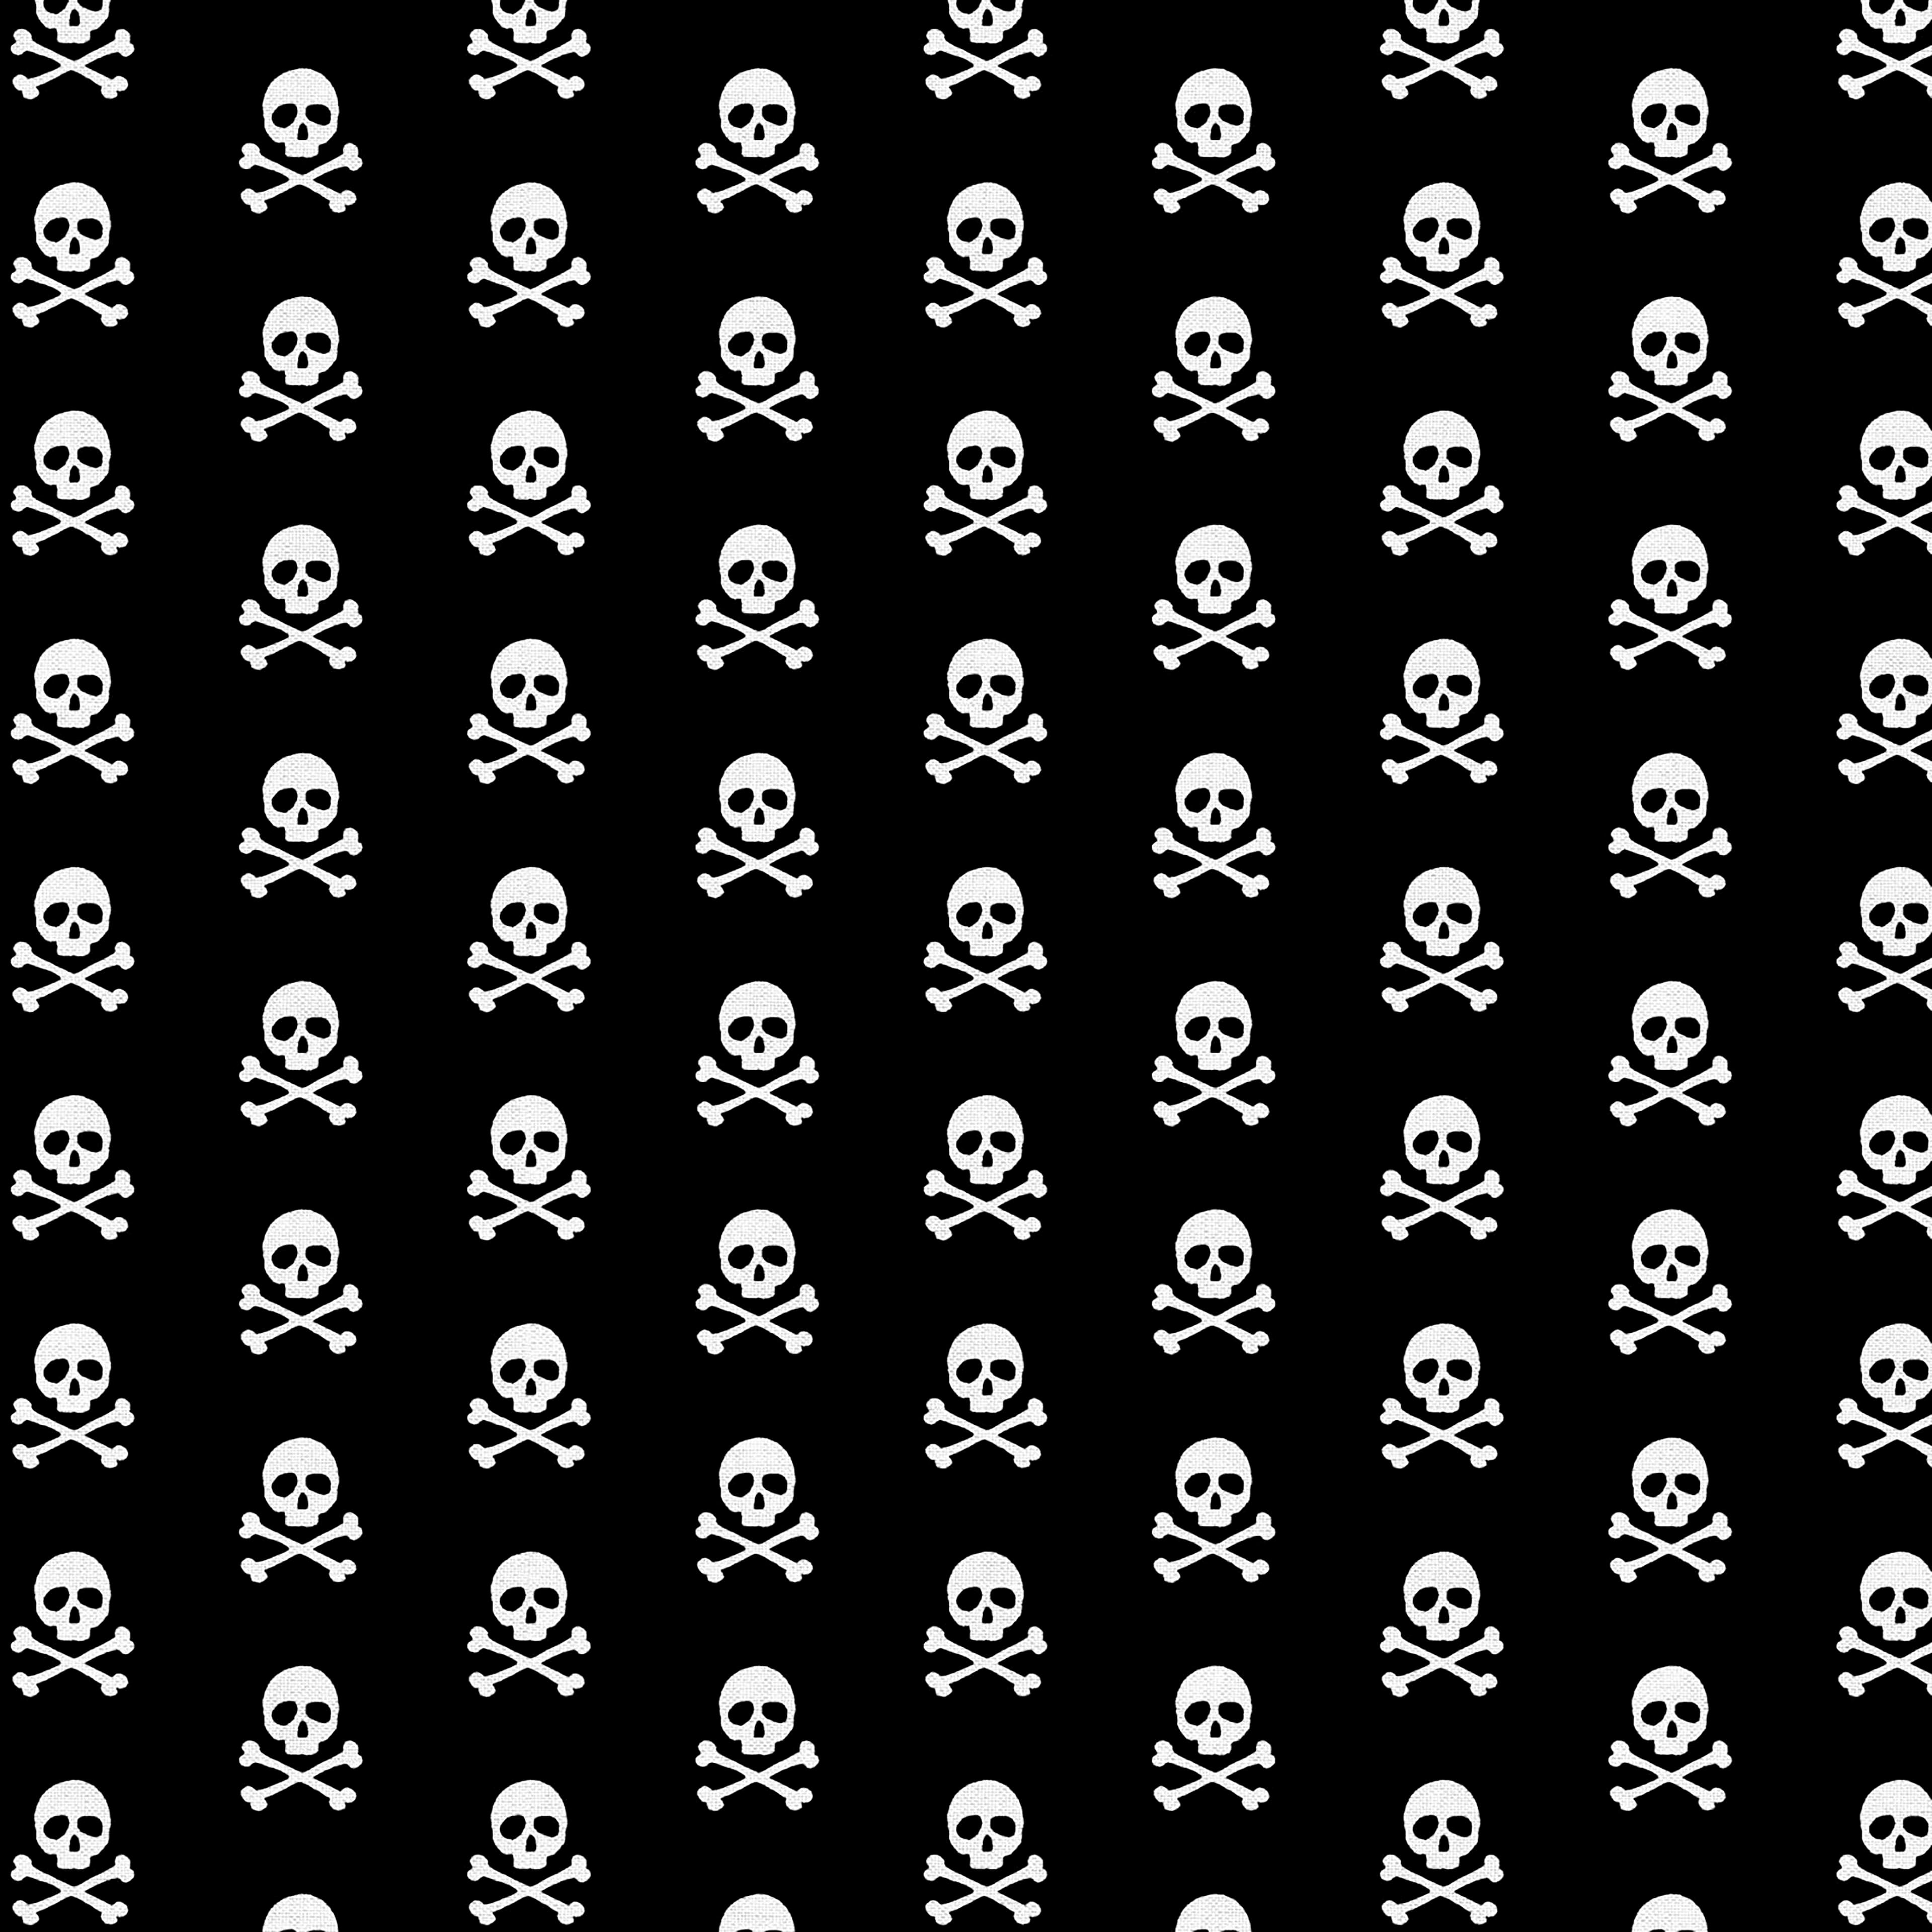 Fabric Editions Black Skulls Cotton Fabric